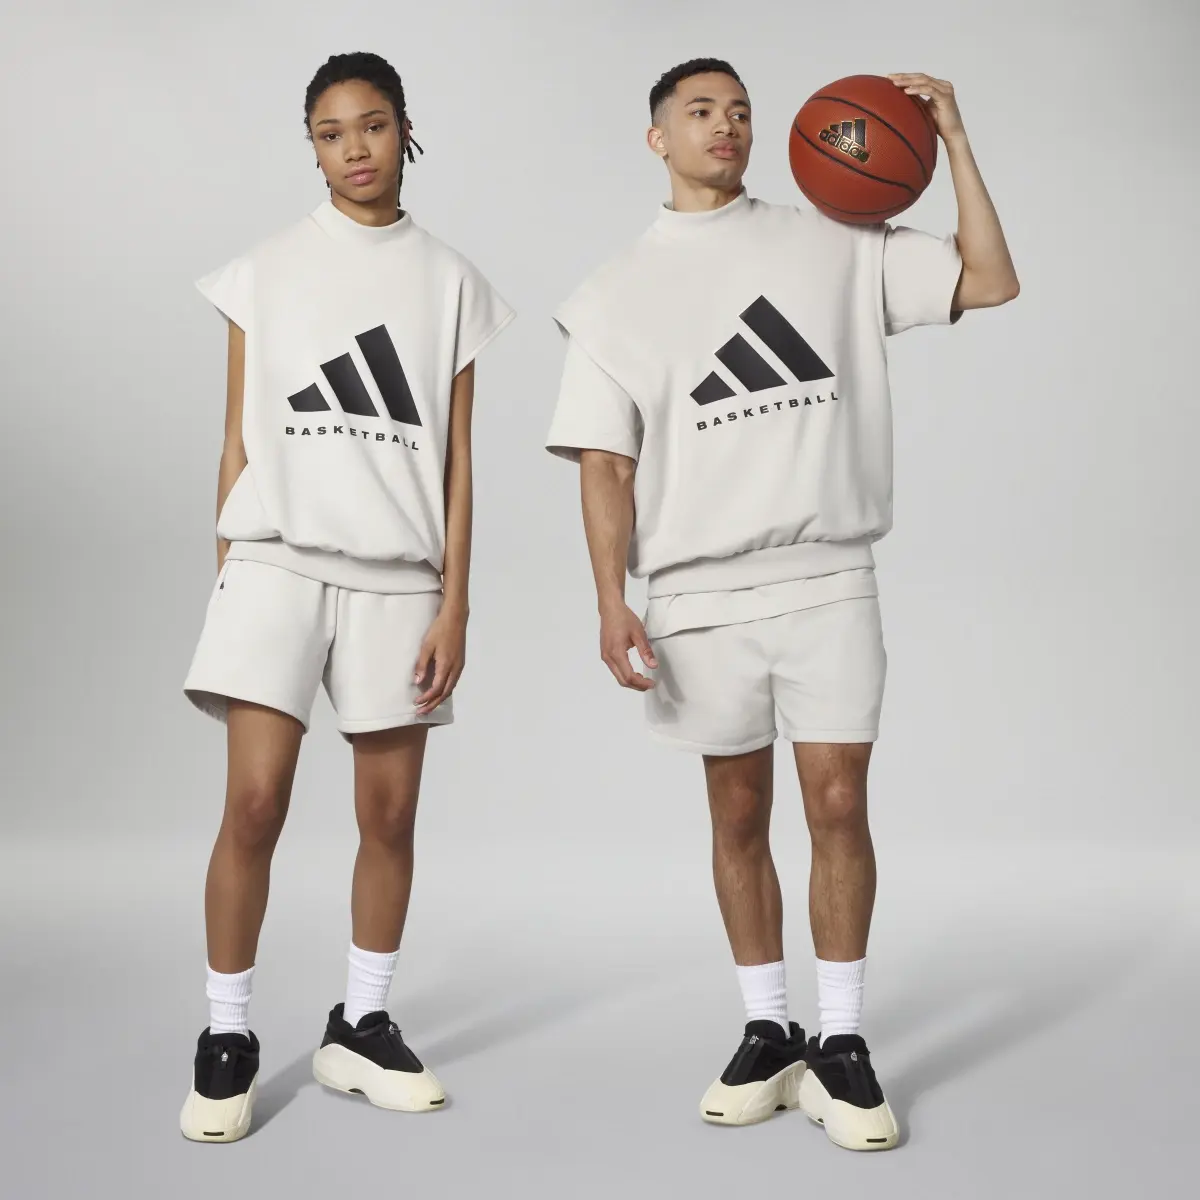 Adidas Sudadera Basketball SIn Mangas (Unisex). 1